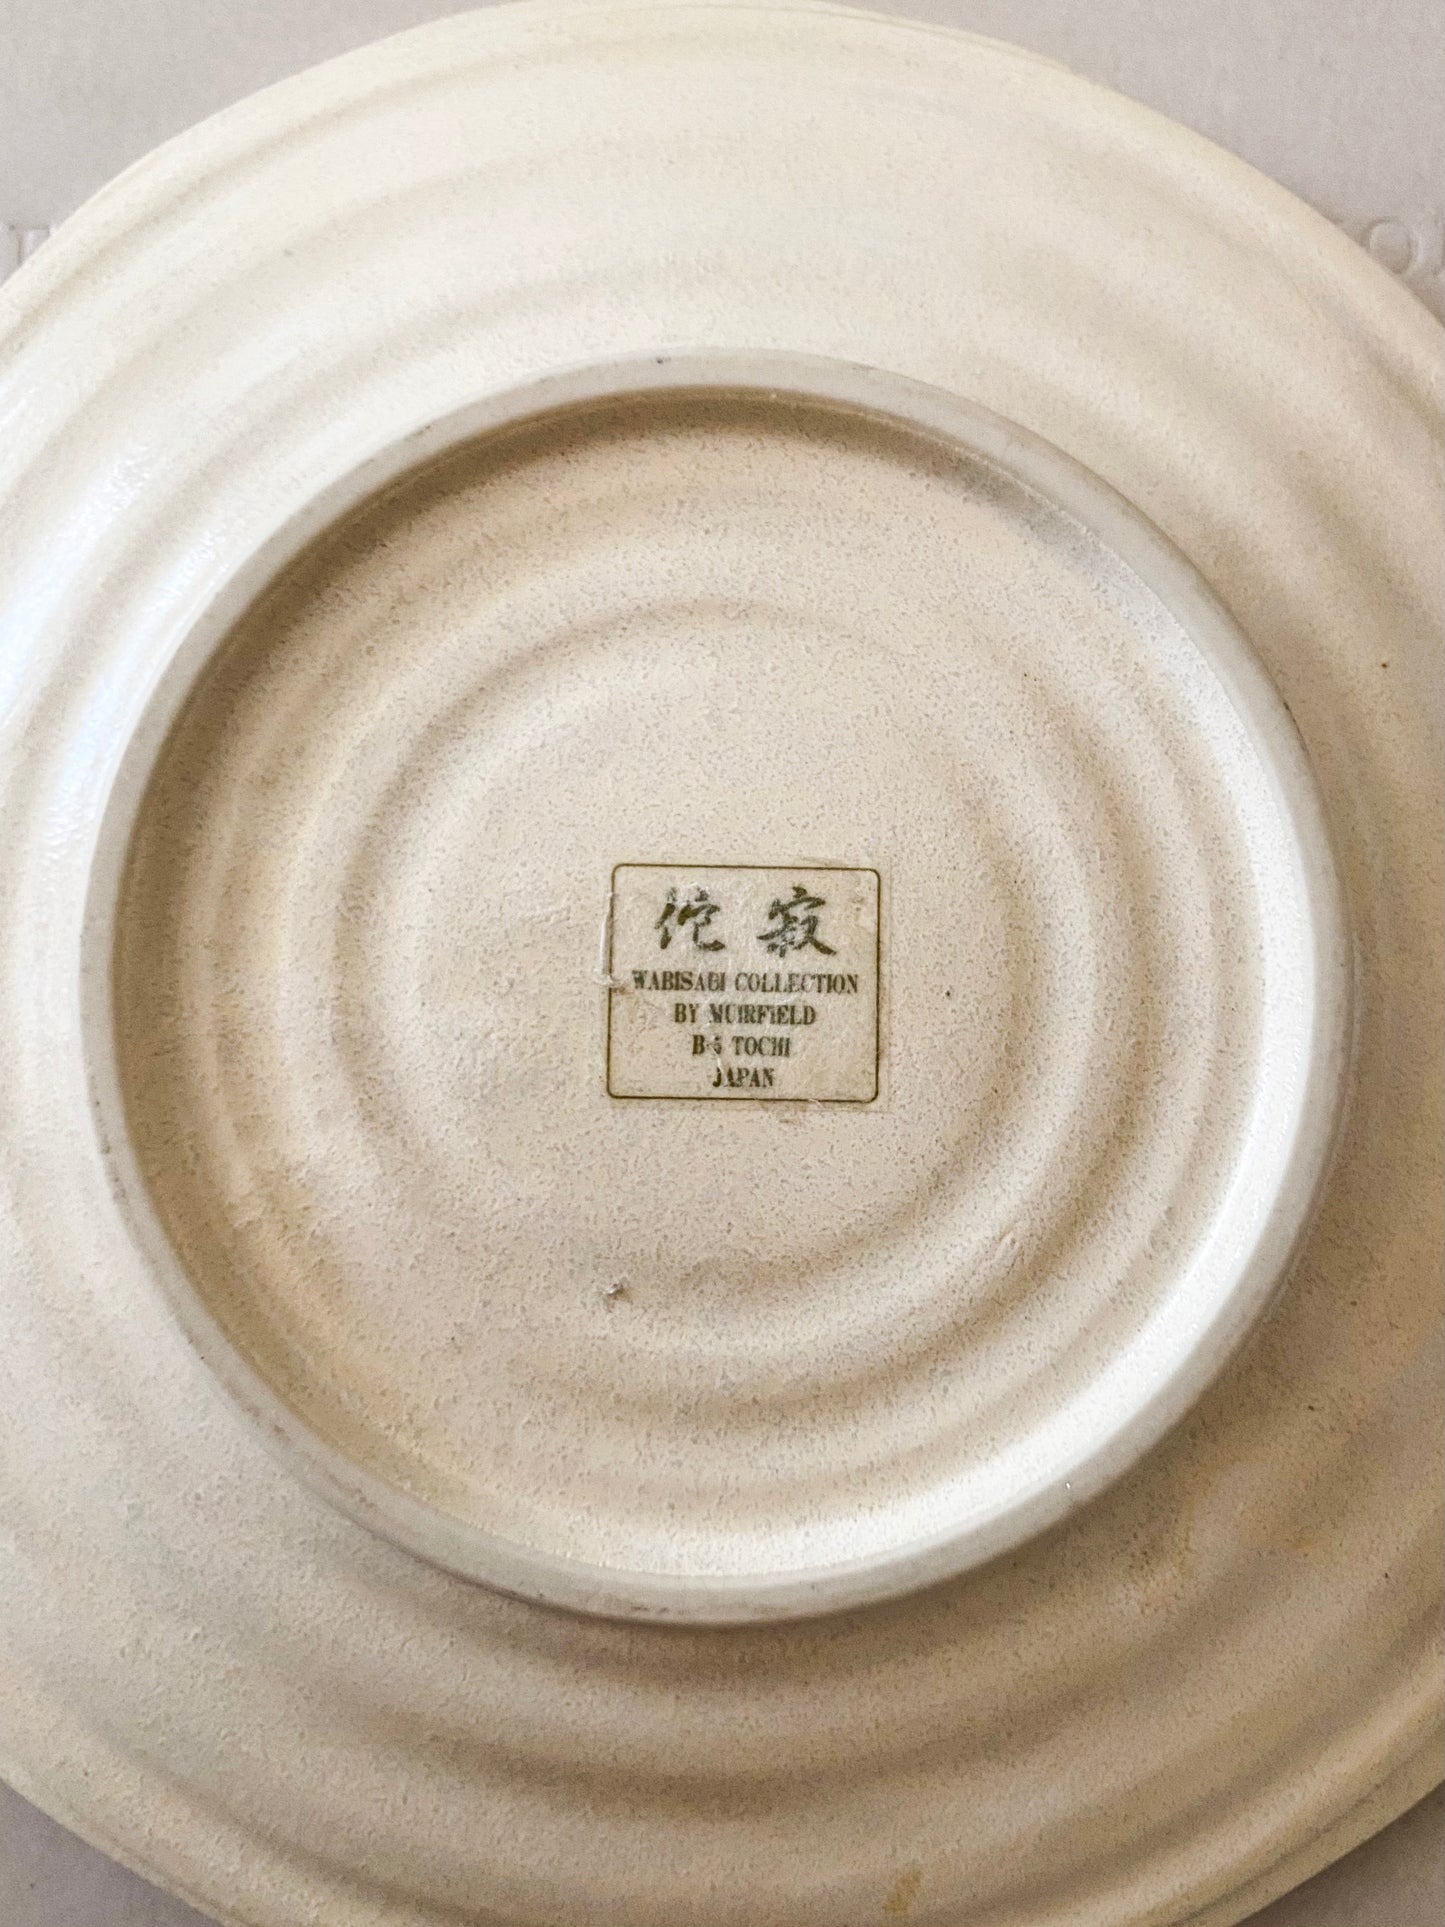 Muirfield Japan B-5 Tochi Plate